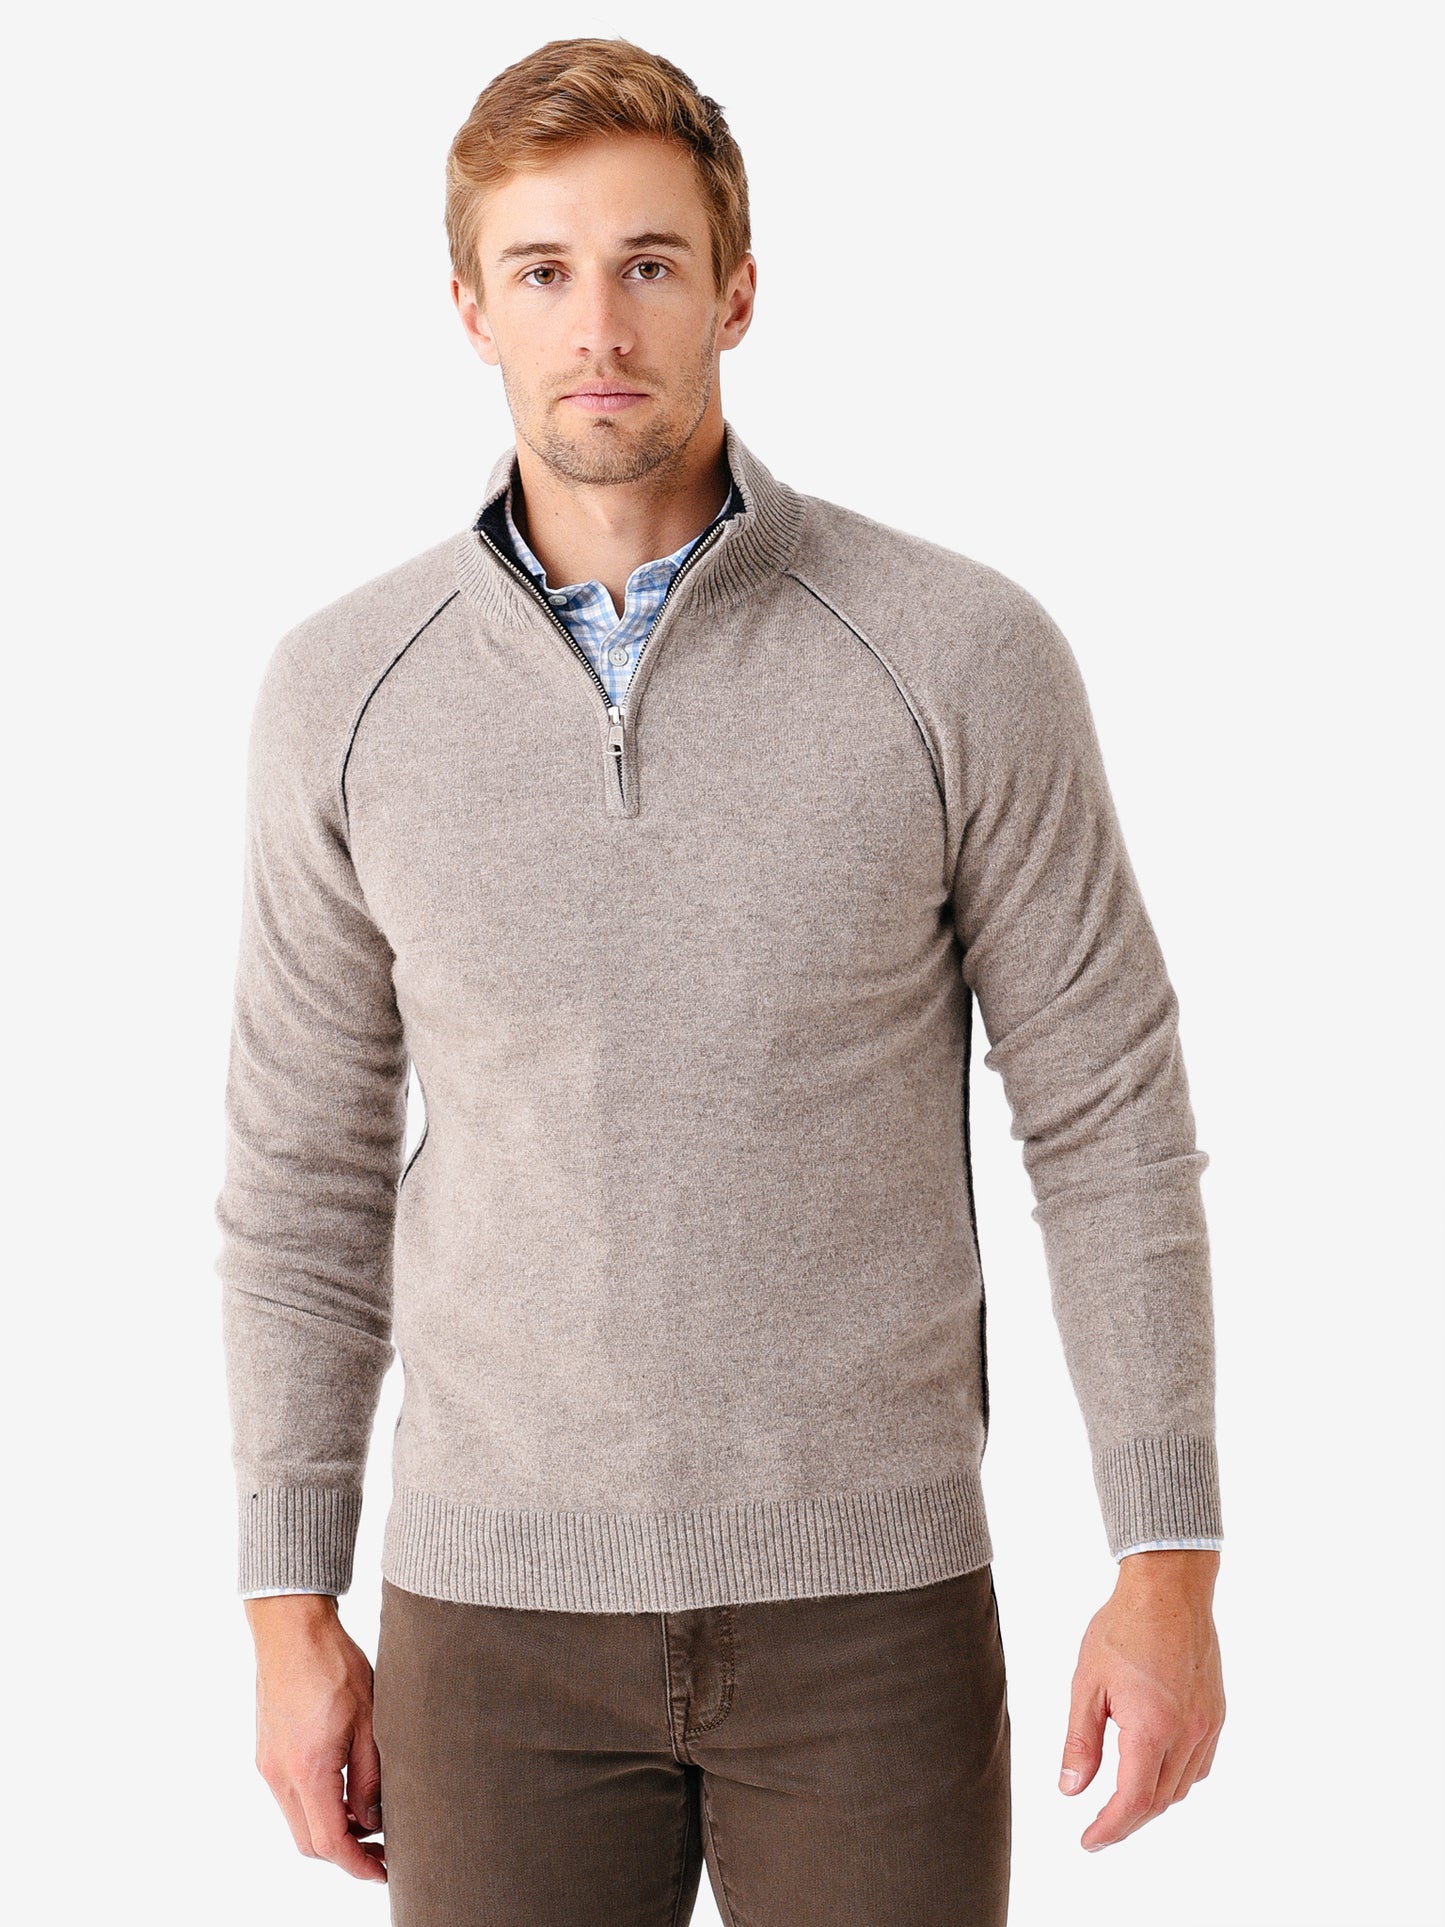 Naadam Cashmere Men's Quarter-Zip Sweater